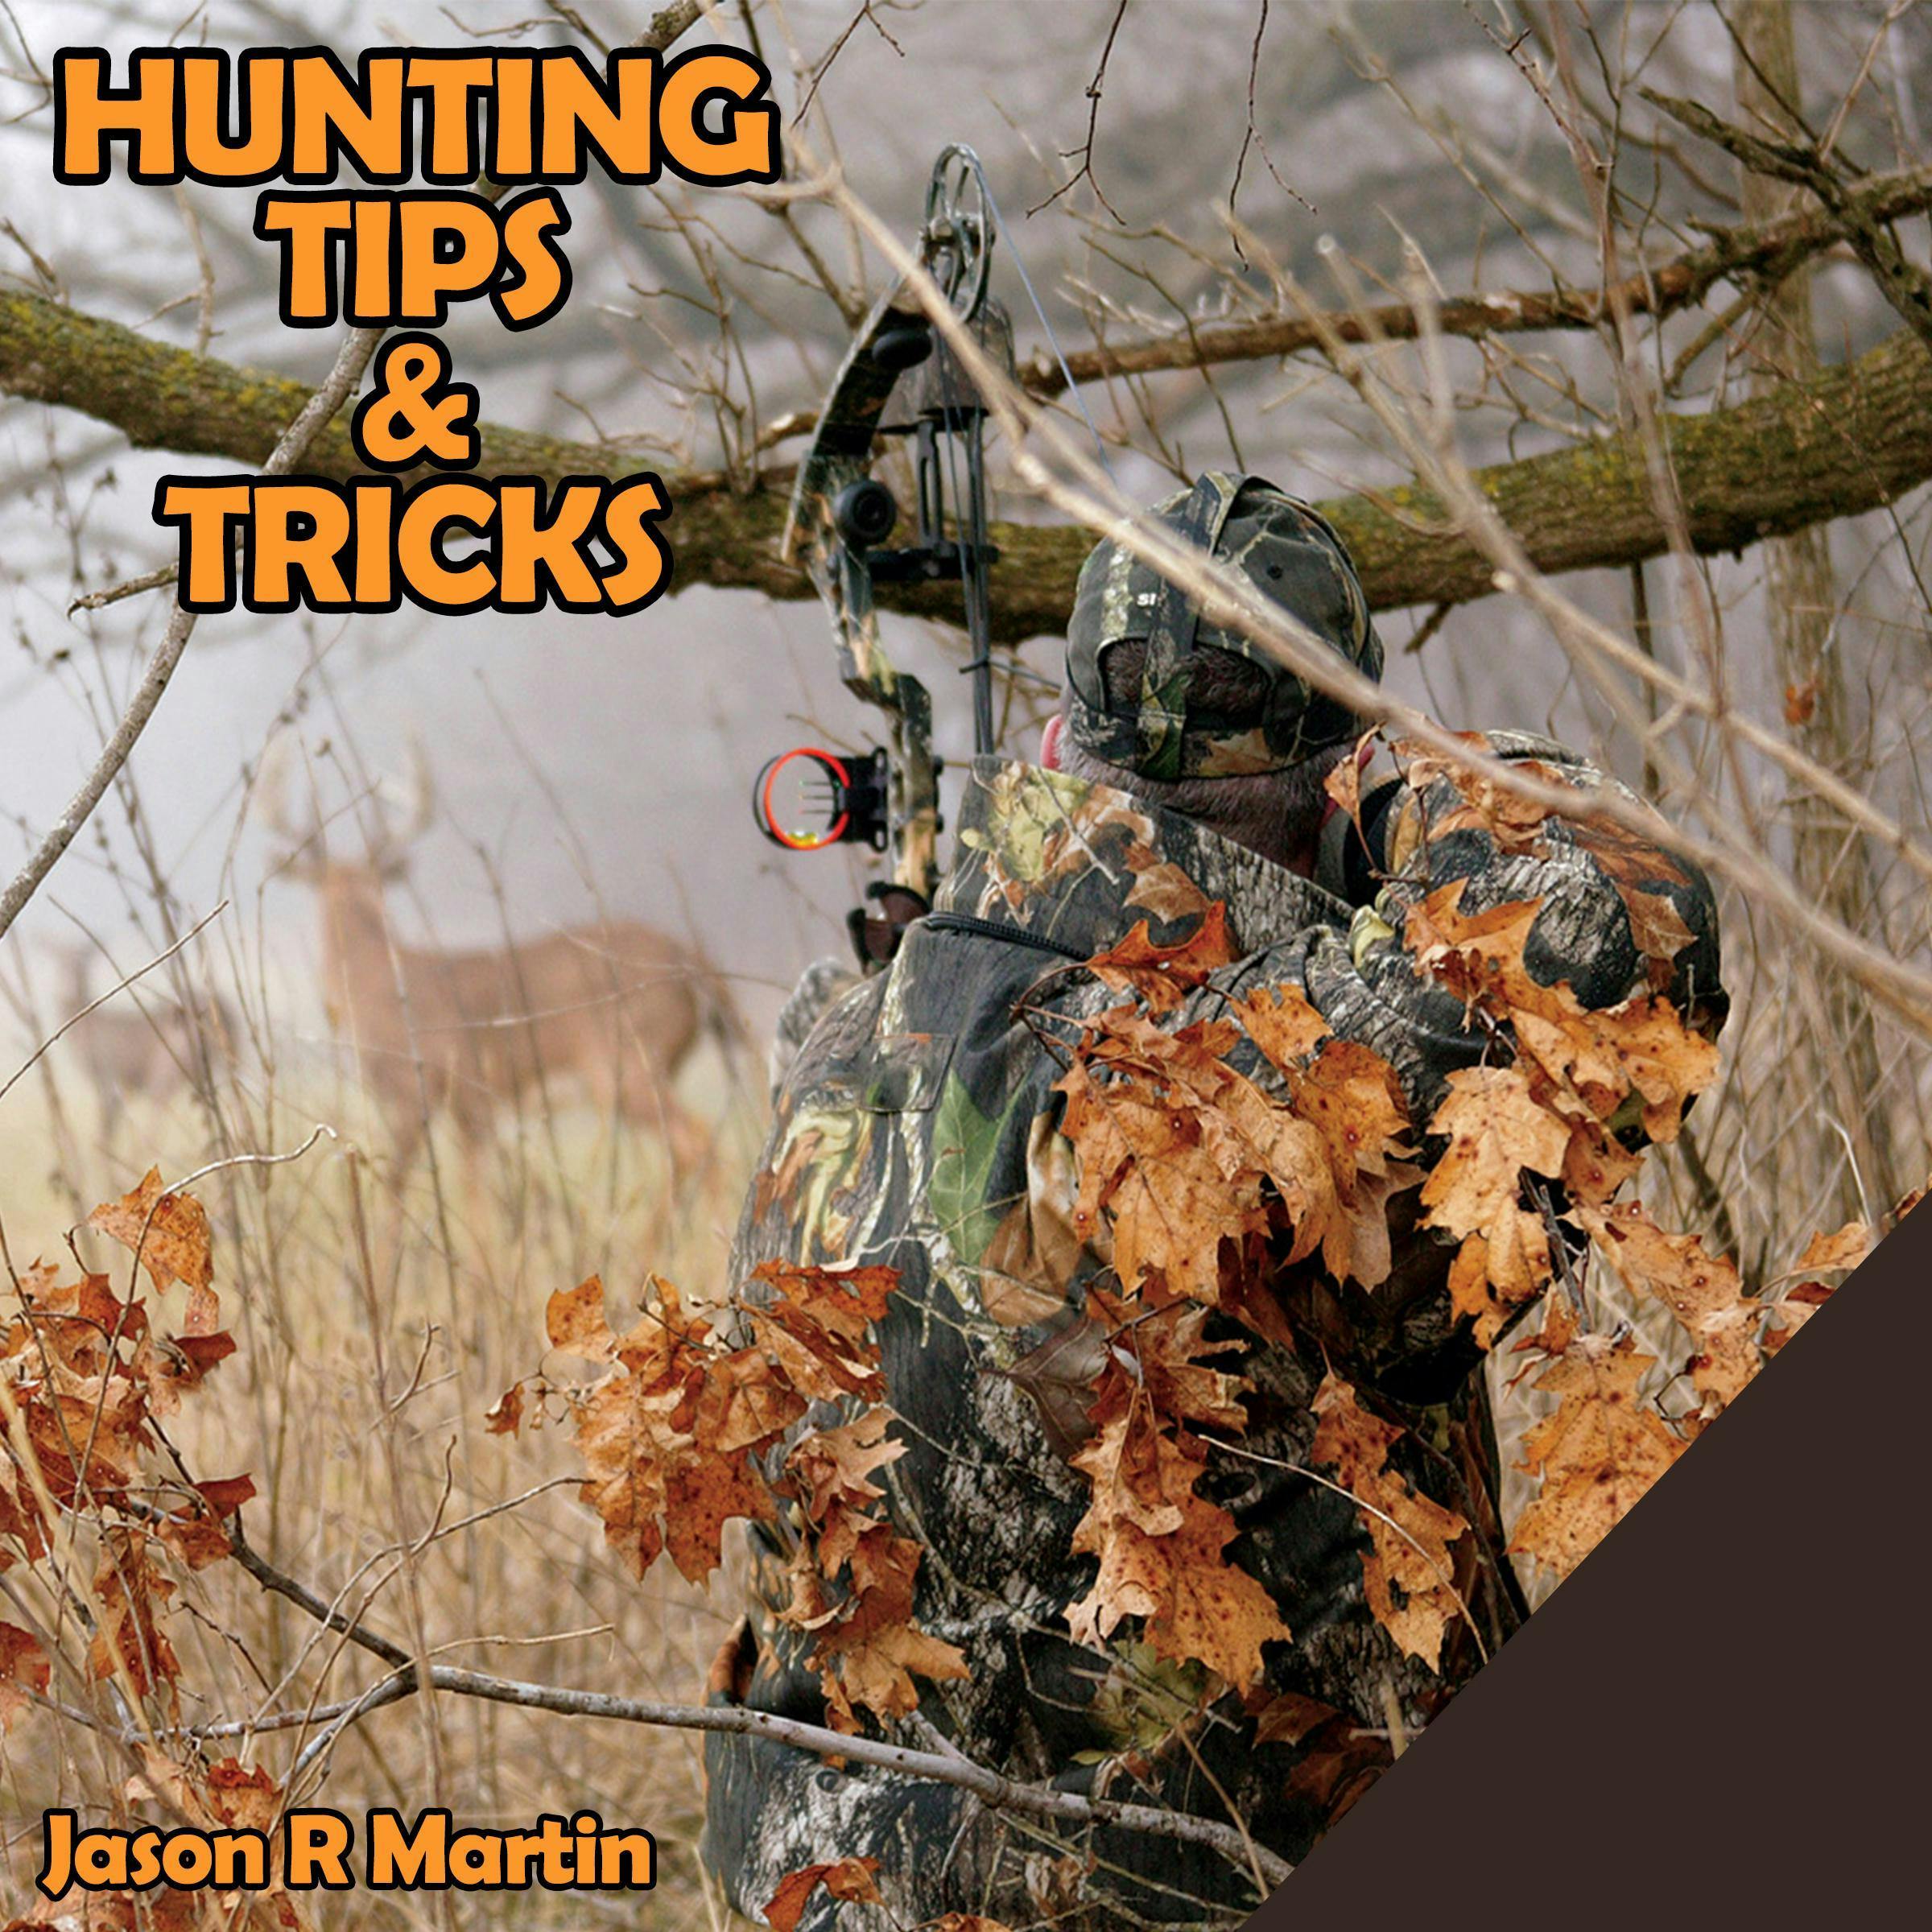 Hunting Tips & Tricks: Jason R Martin - undefined